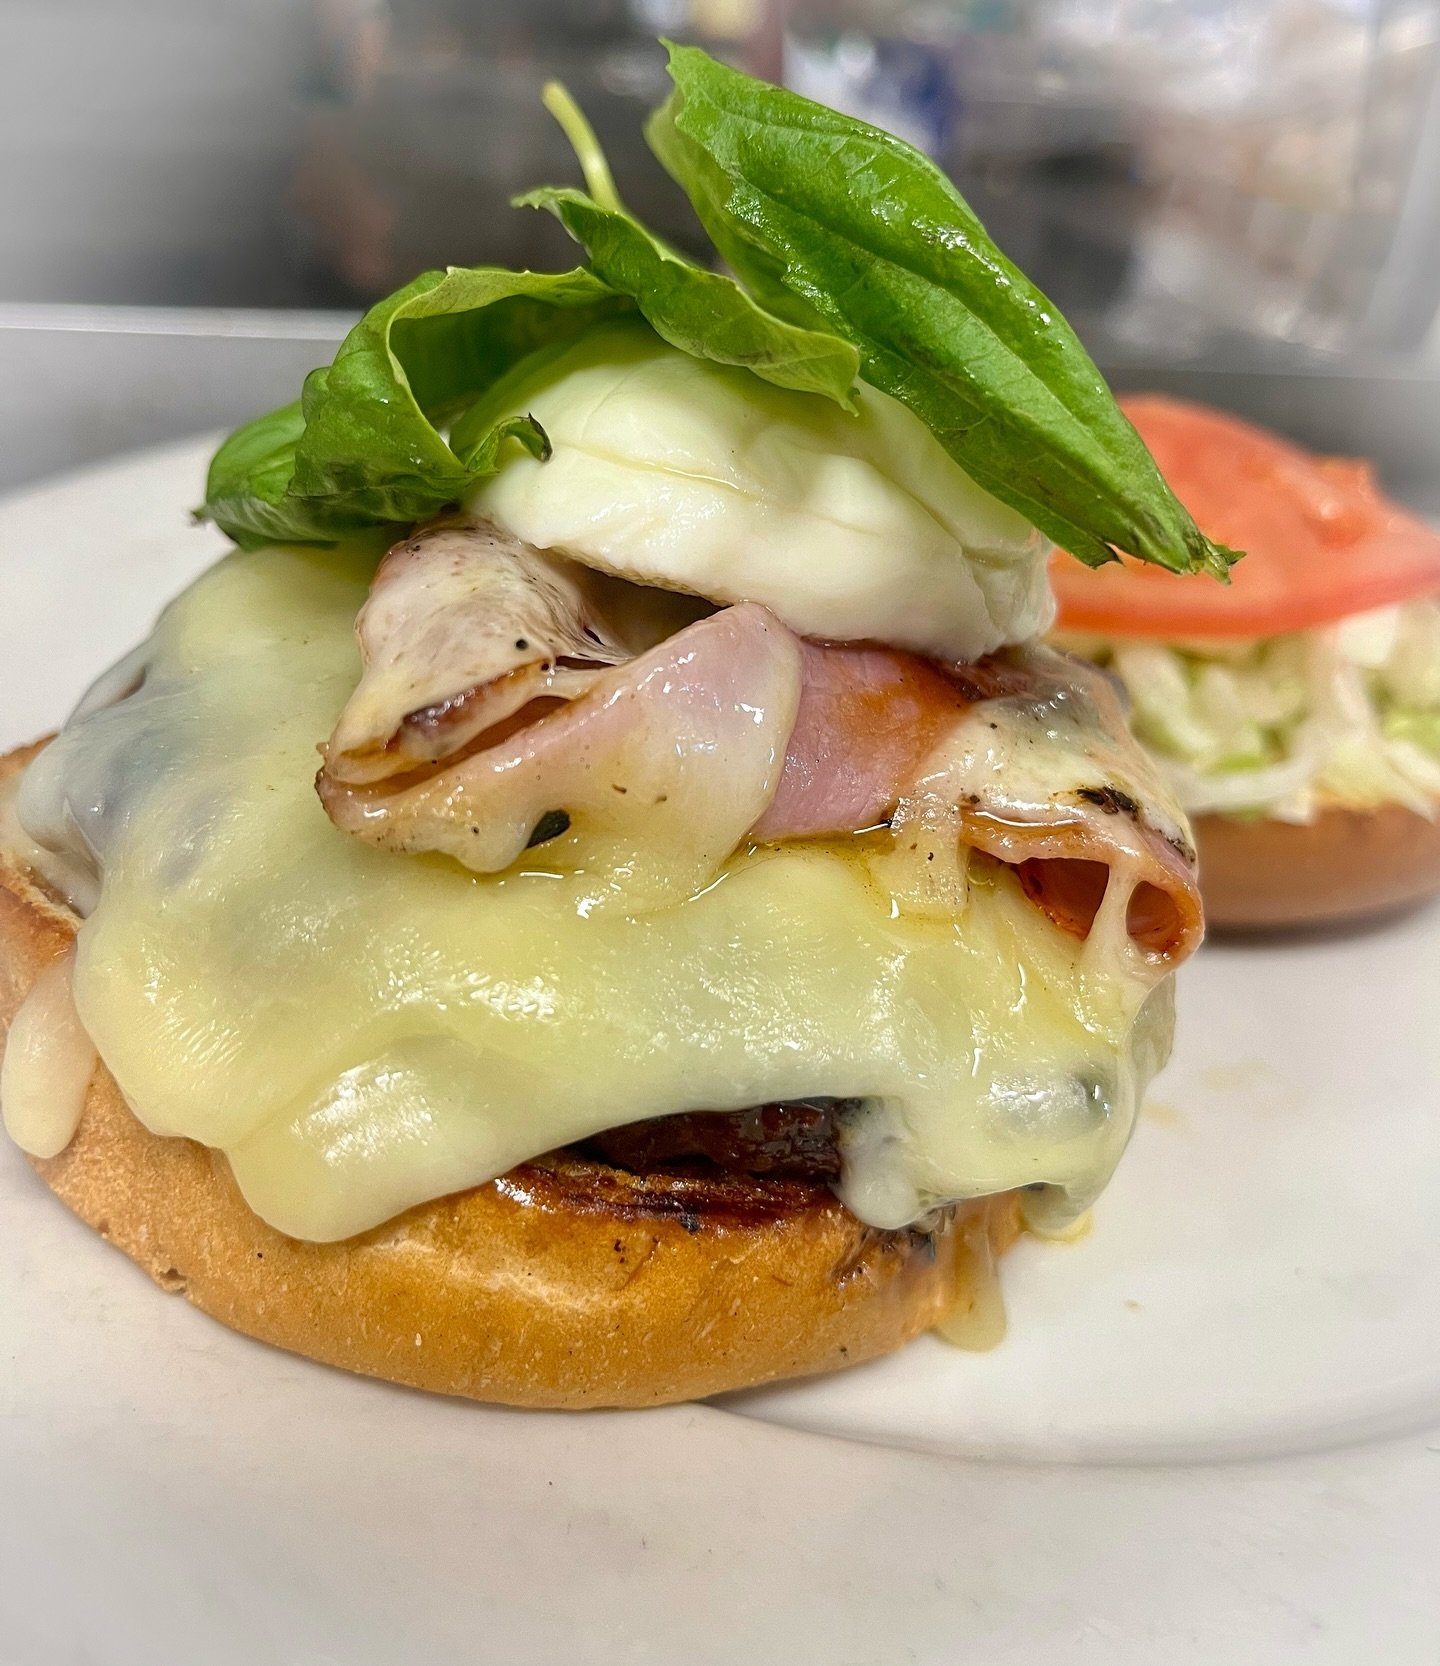 .
&bull;&bull;𝓑𝓾𝓻𝓰𝓮𝓻 𝓸𝓯 𝓽𝓱𝓮 𝓦𝓮𝓮𝓴&bull;&bull;
&mdash;8oz. burger patty topped with Ham, pepperoni, salami, provolone, lettuce, tomato, mayo, fresh Mozzarella, and Basil 👀😍 available all week!

#burgeroftheweek #italianstallion #italia